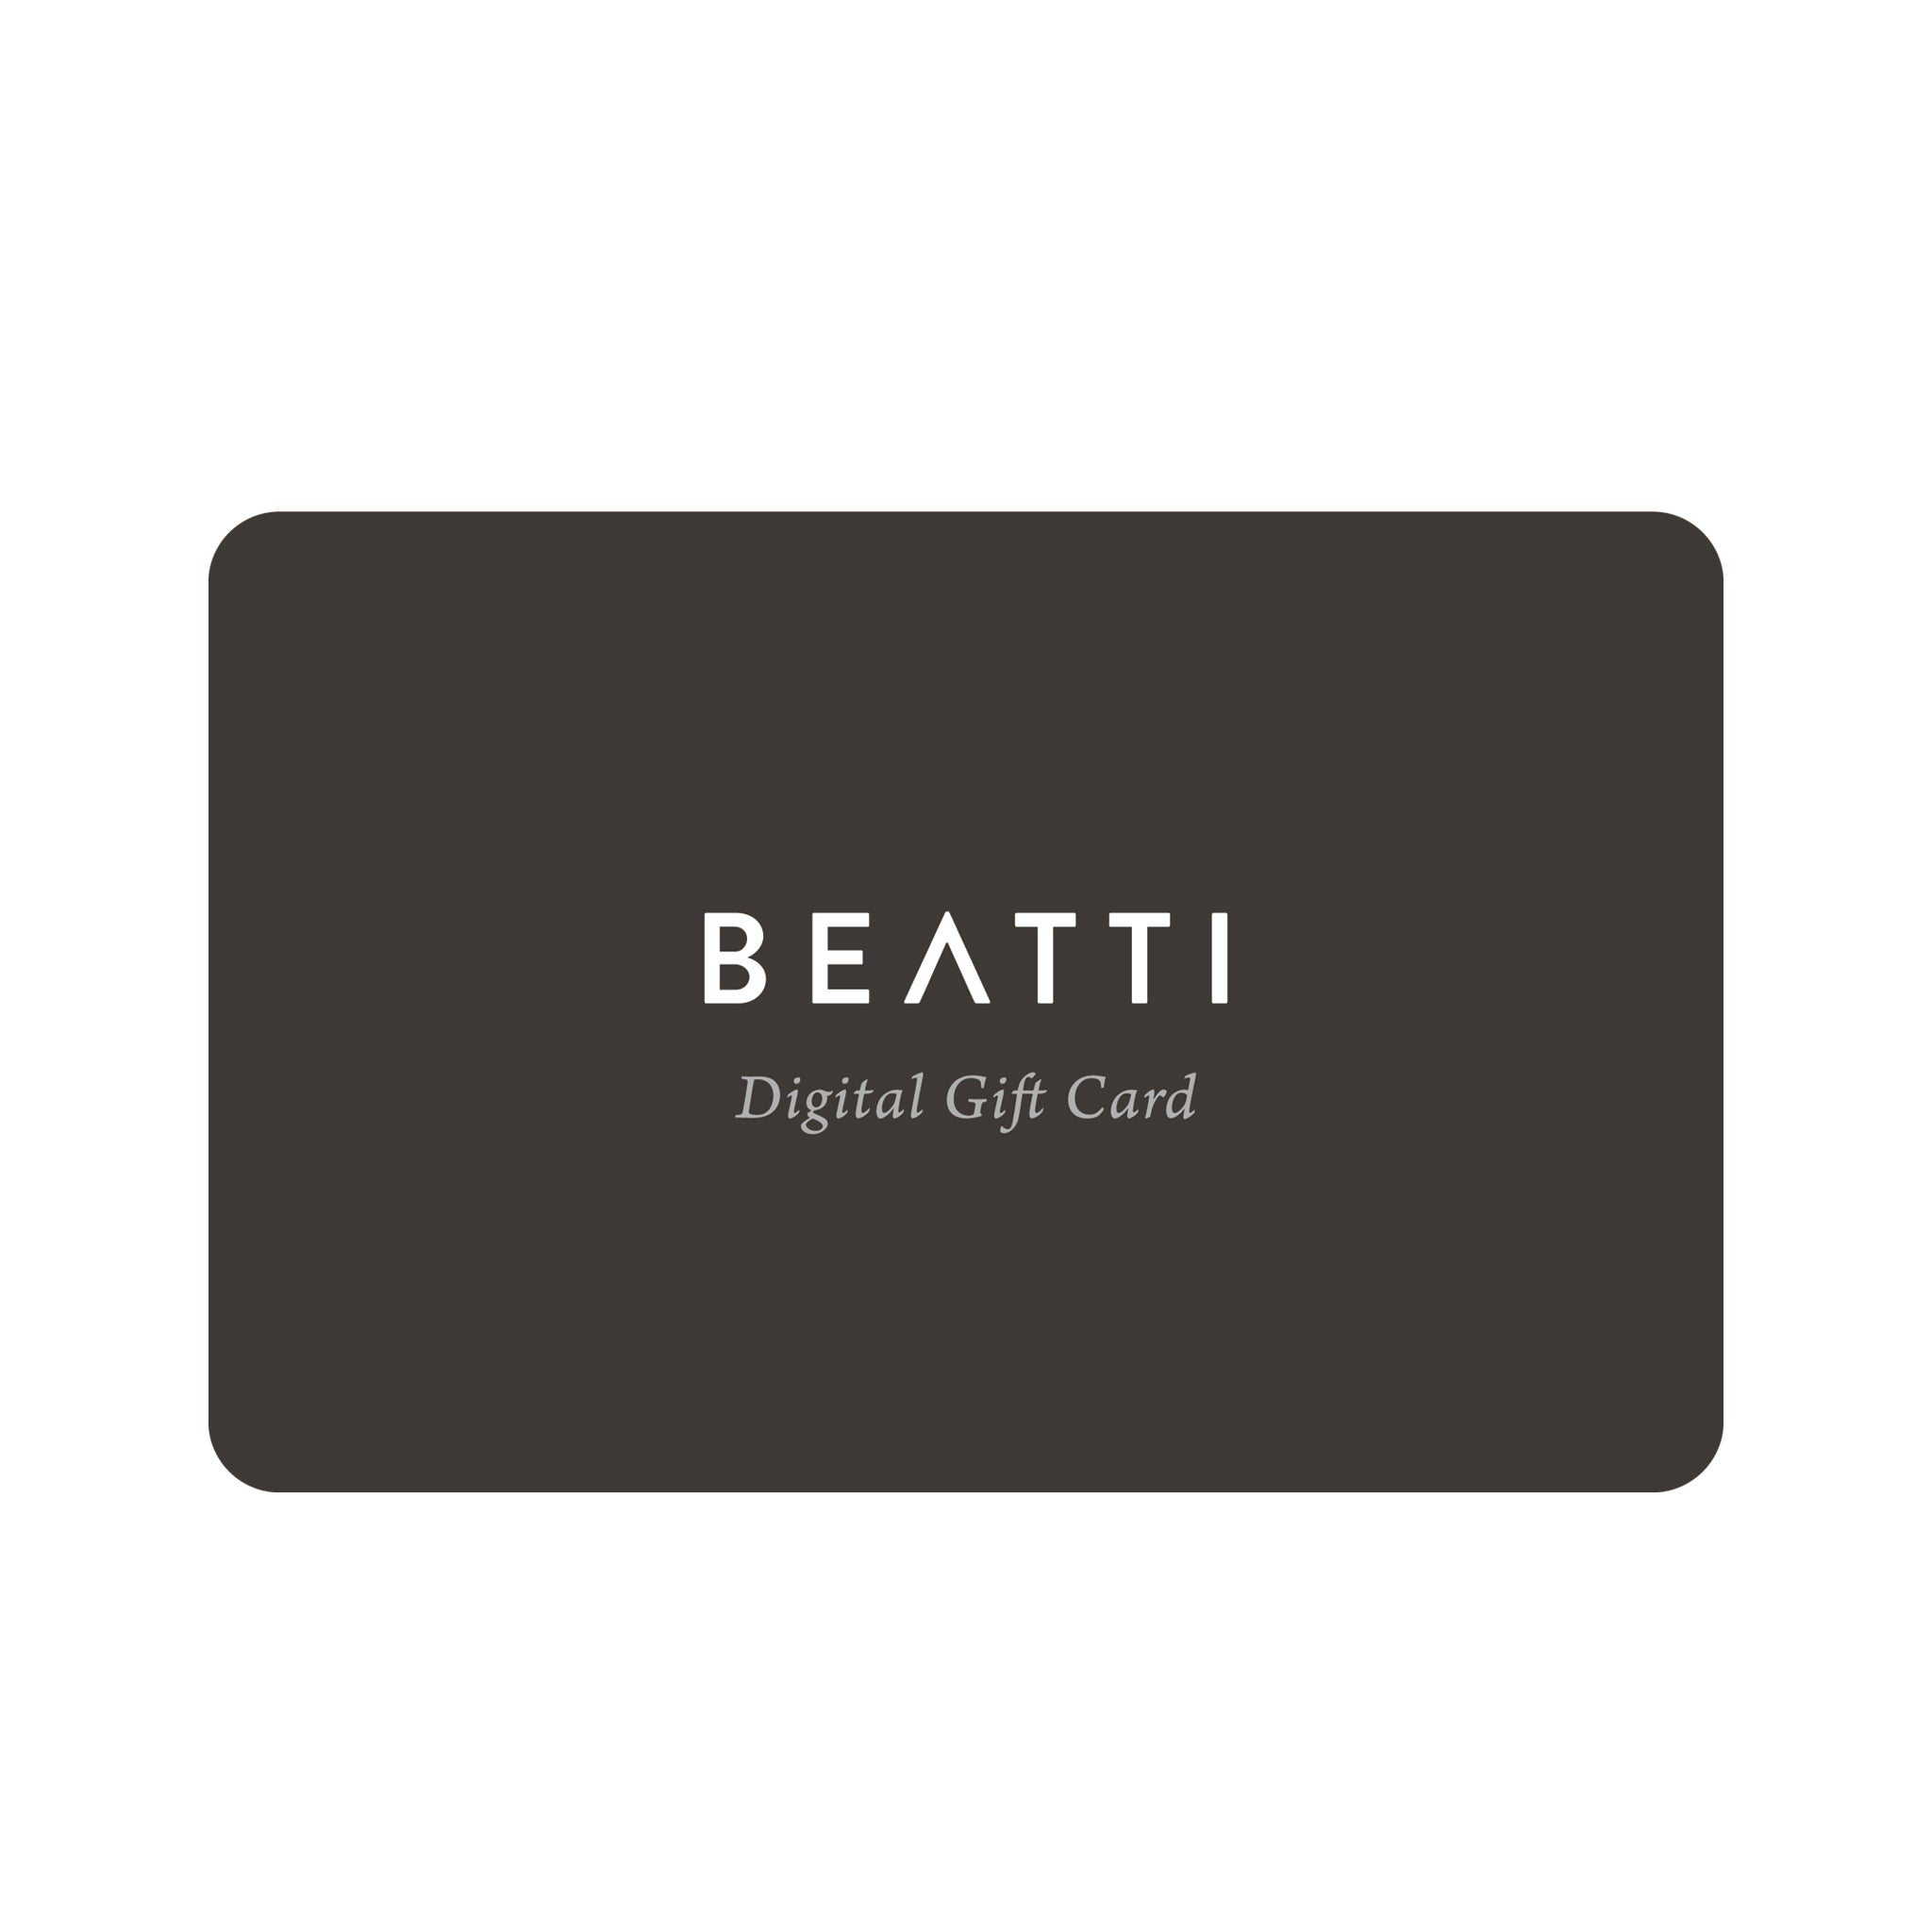 Digital Gift Card - BEATTI